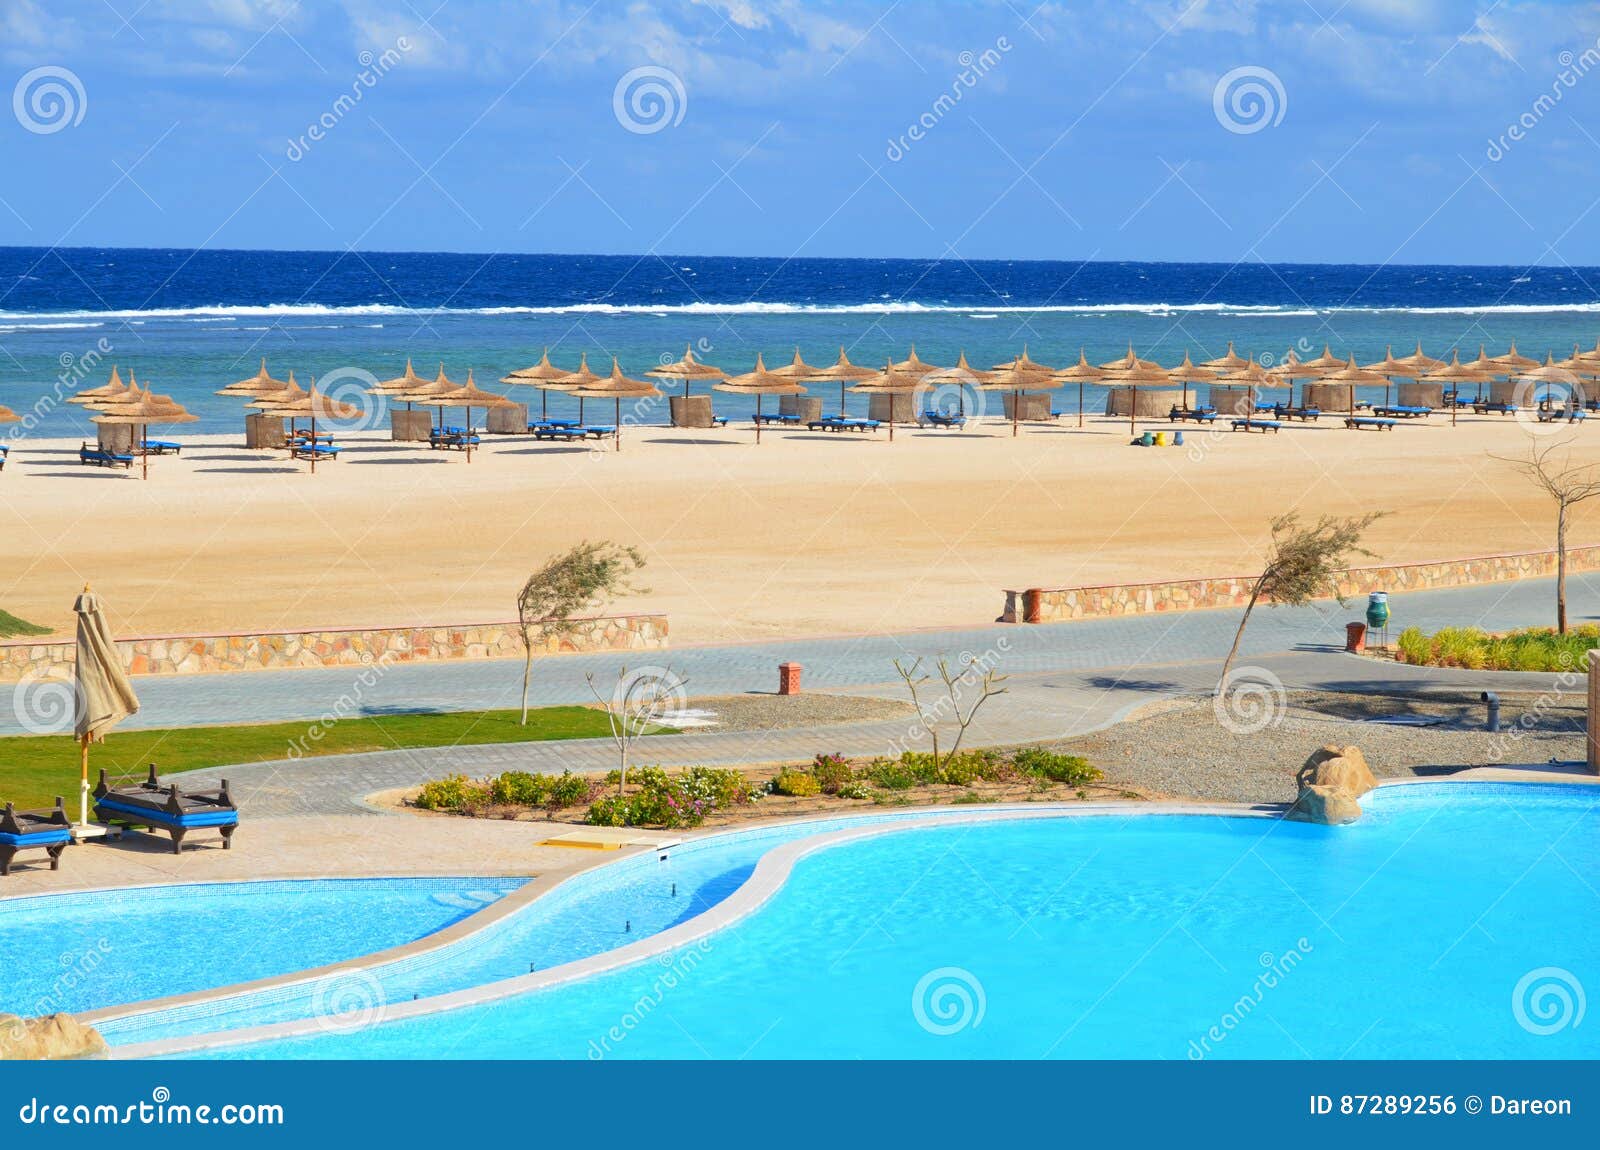 sandy beach at hotel in marsa alam - egypt